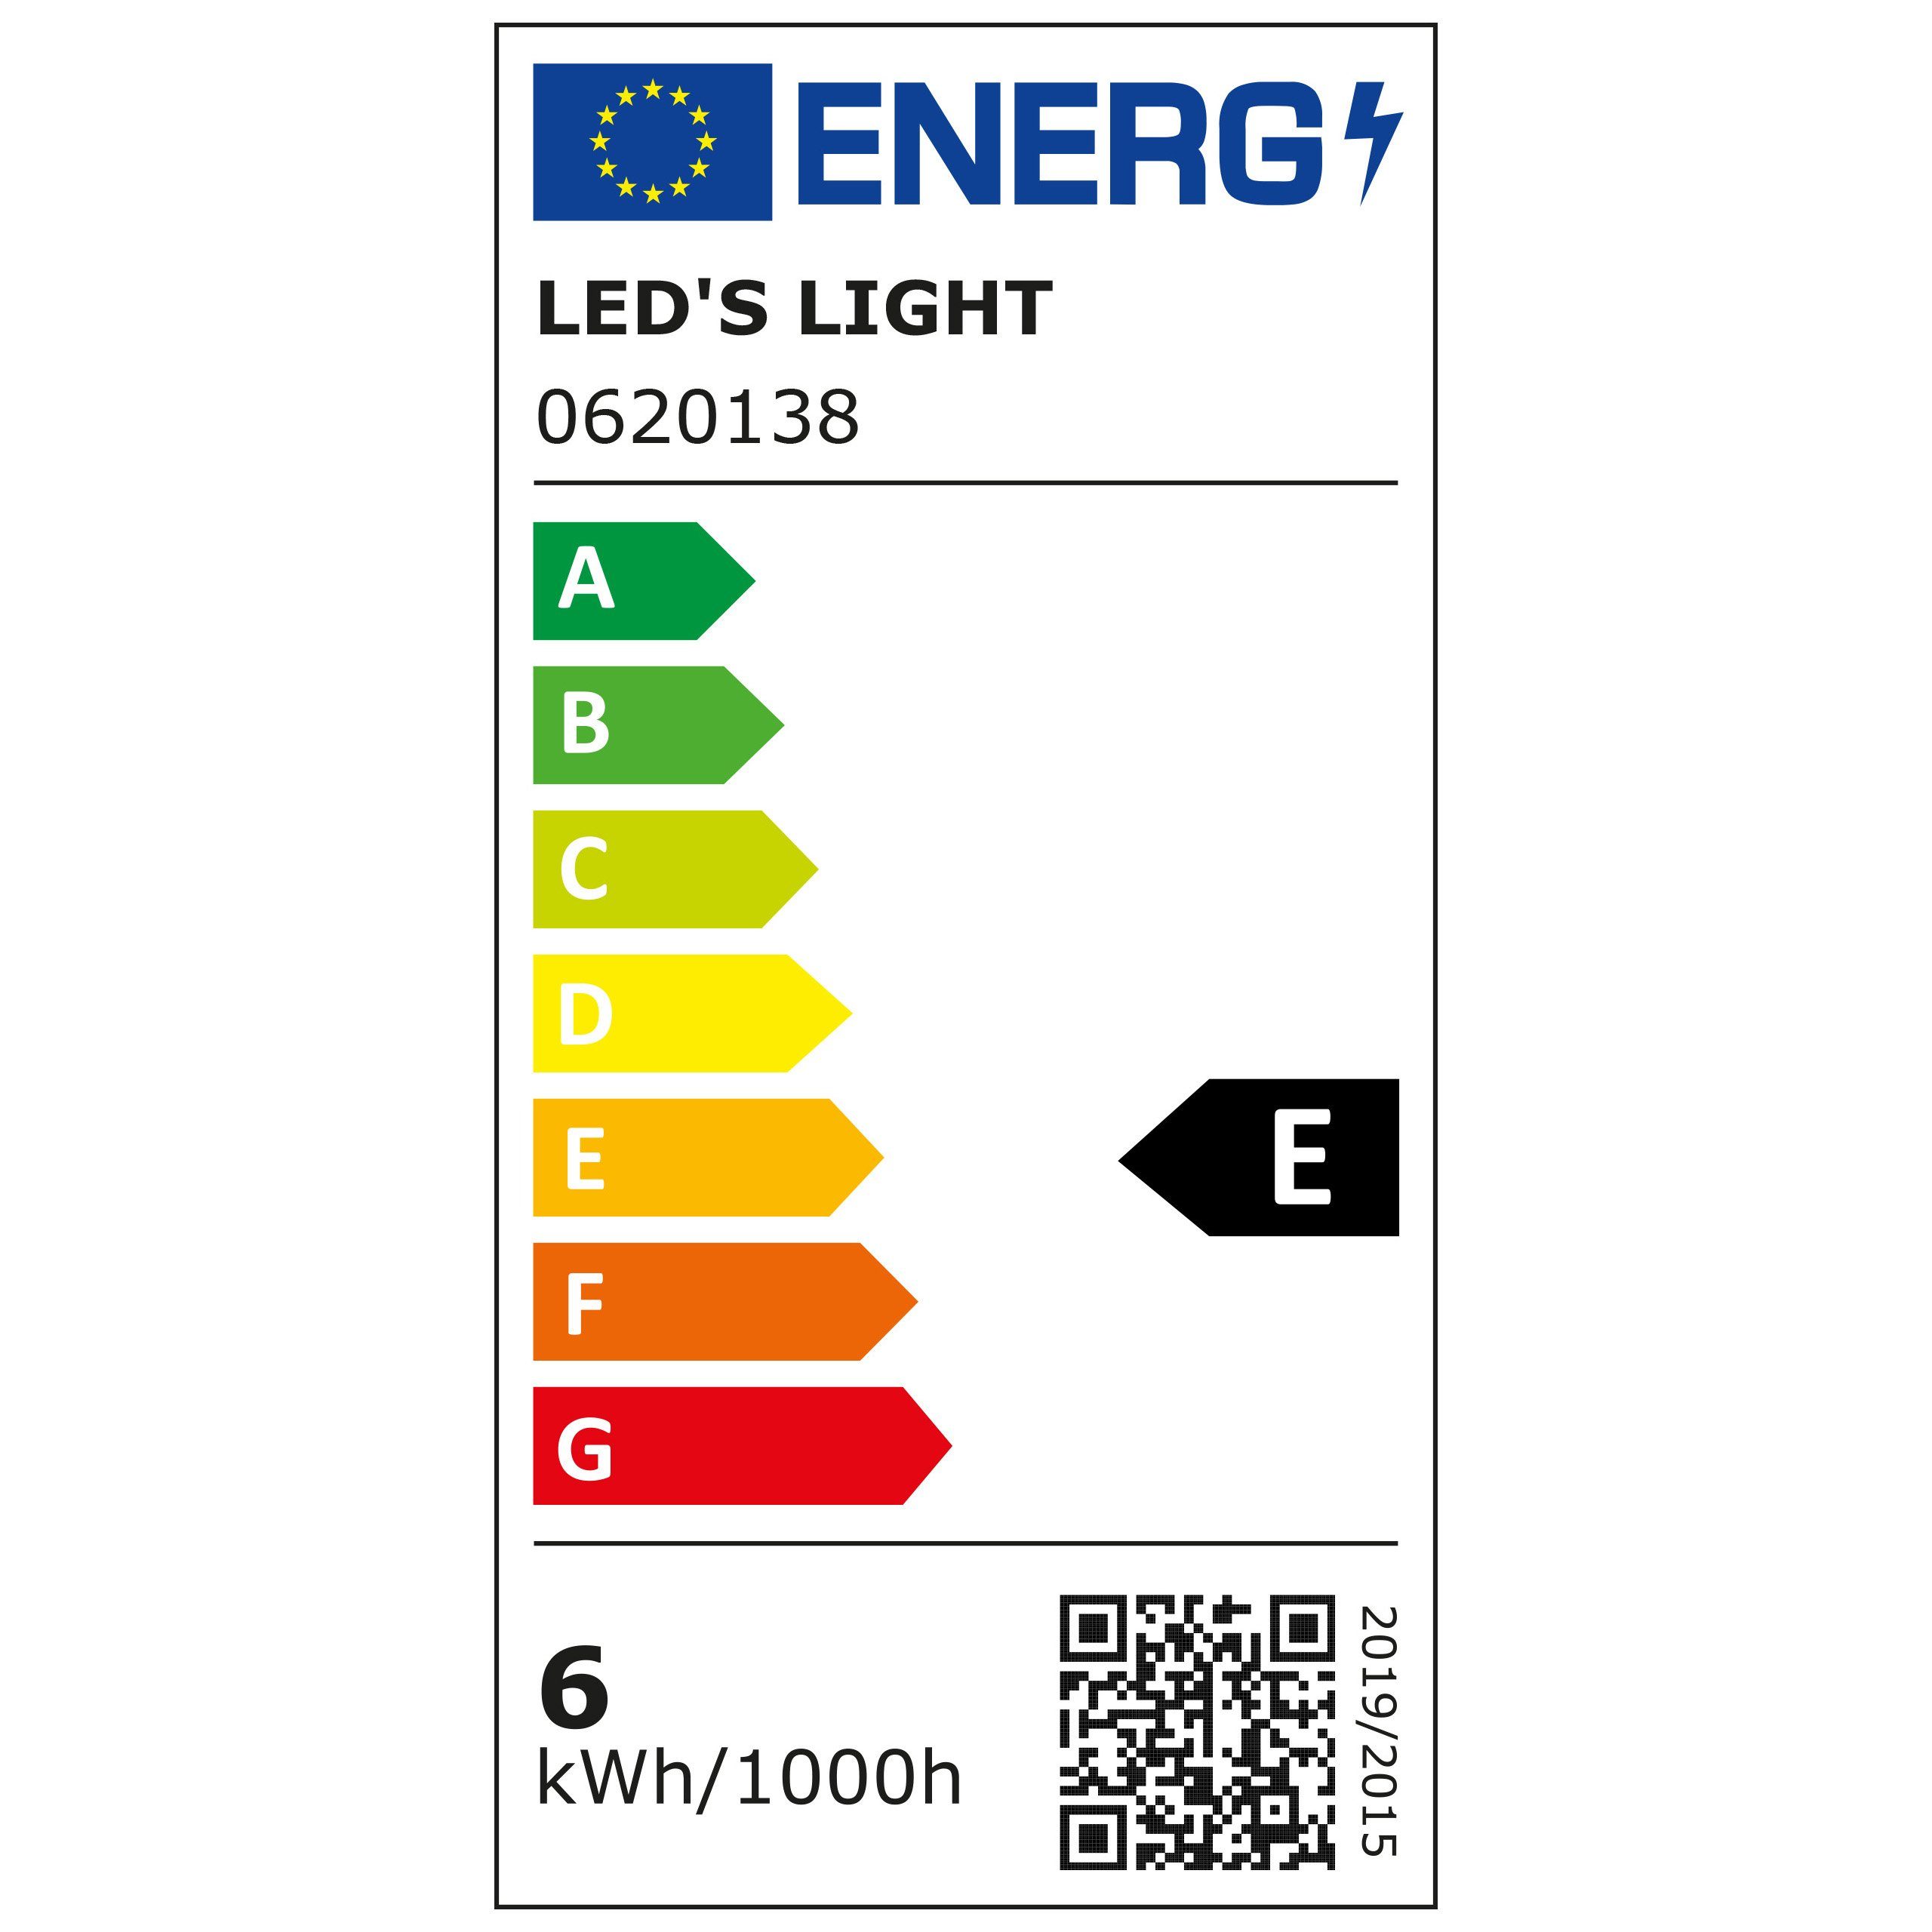 LED's light LED-Leuchtmittel 0620138 LED GU10 GU10, warmweiß 5,7W MR16 Spot, Klar dimmbar